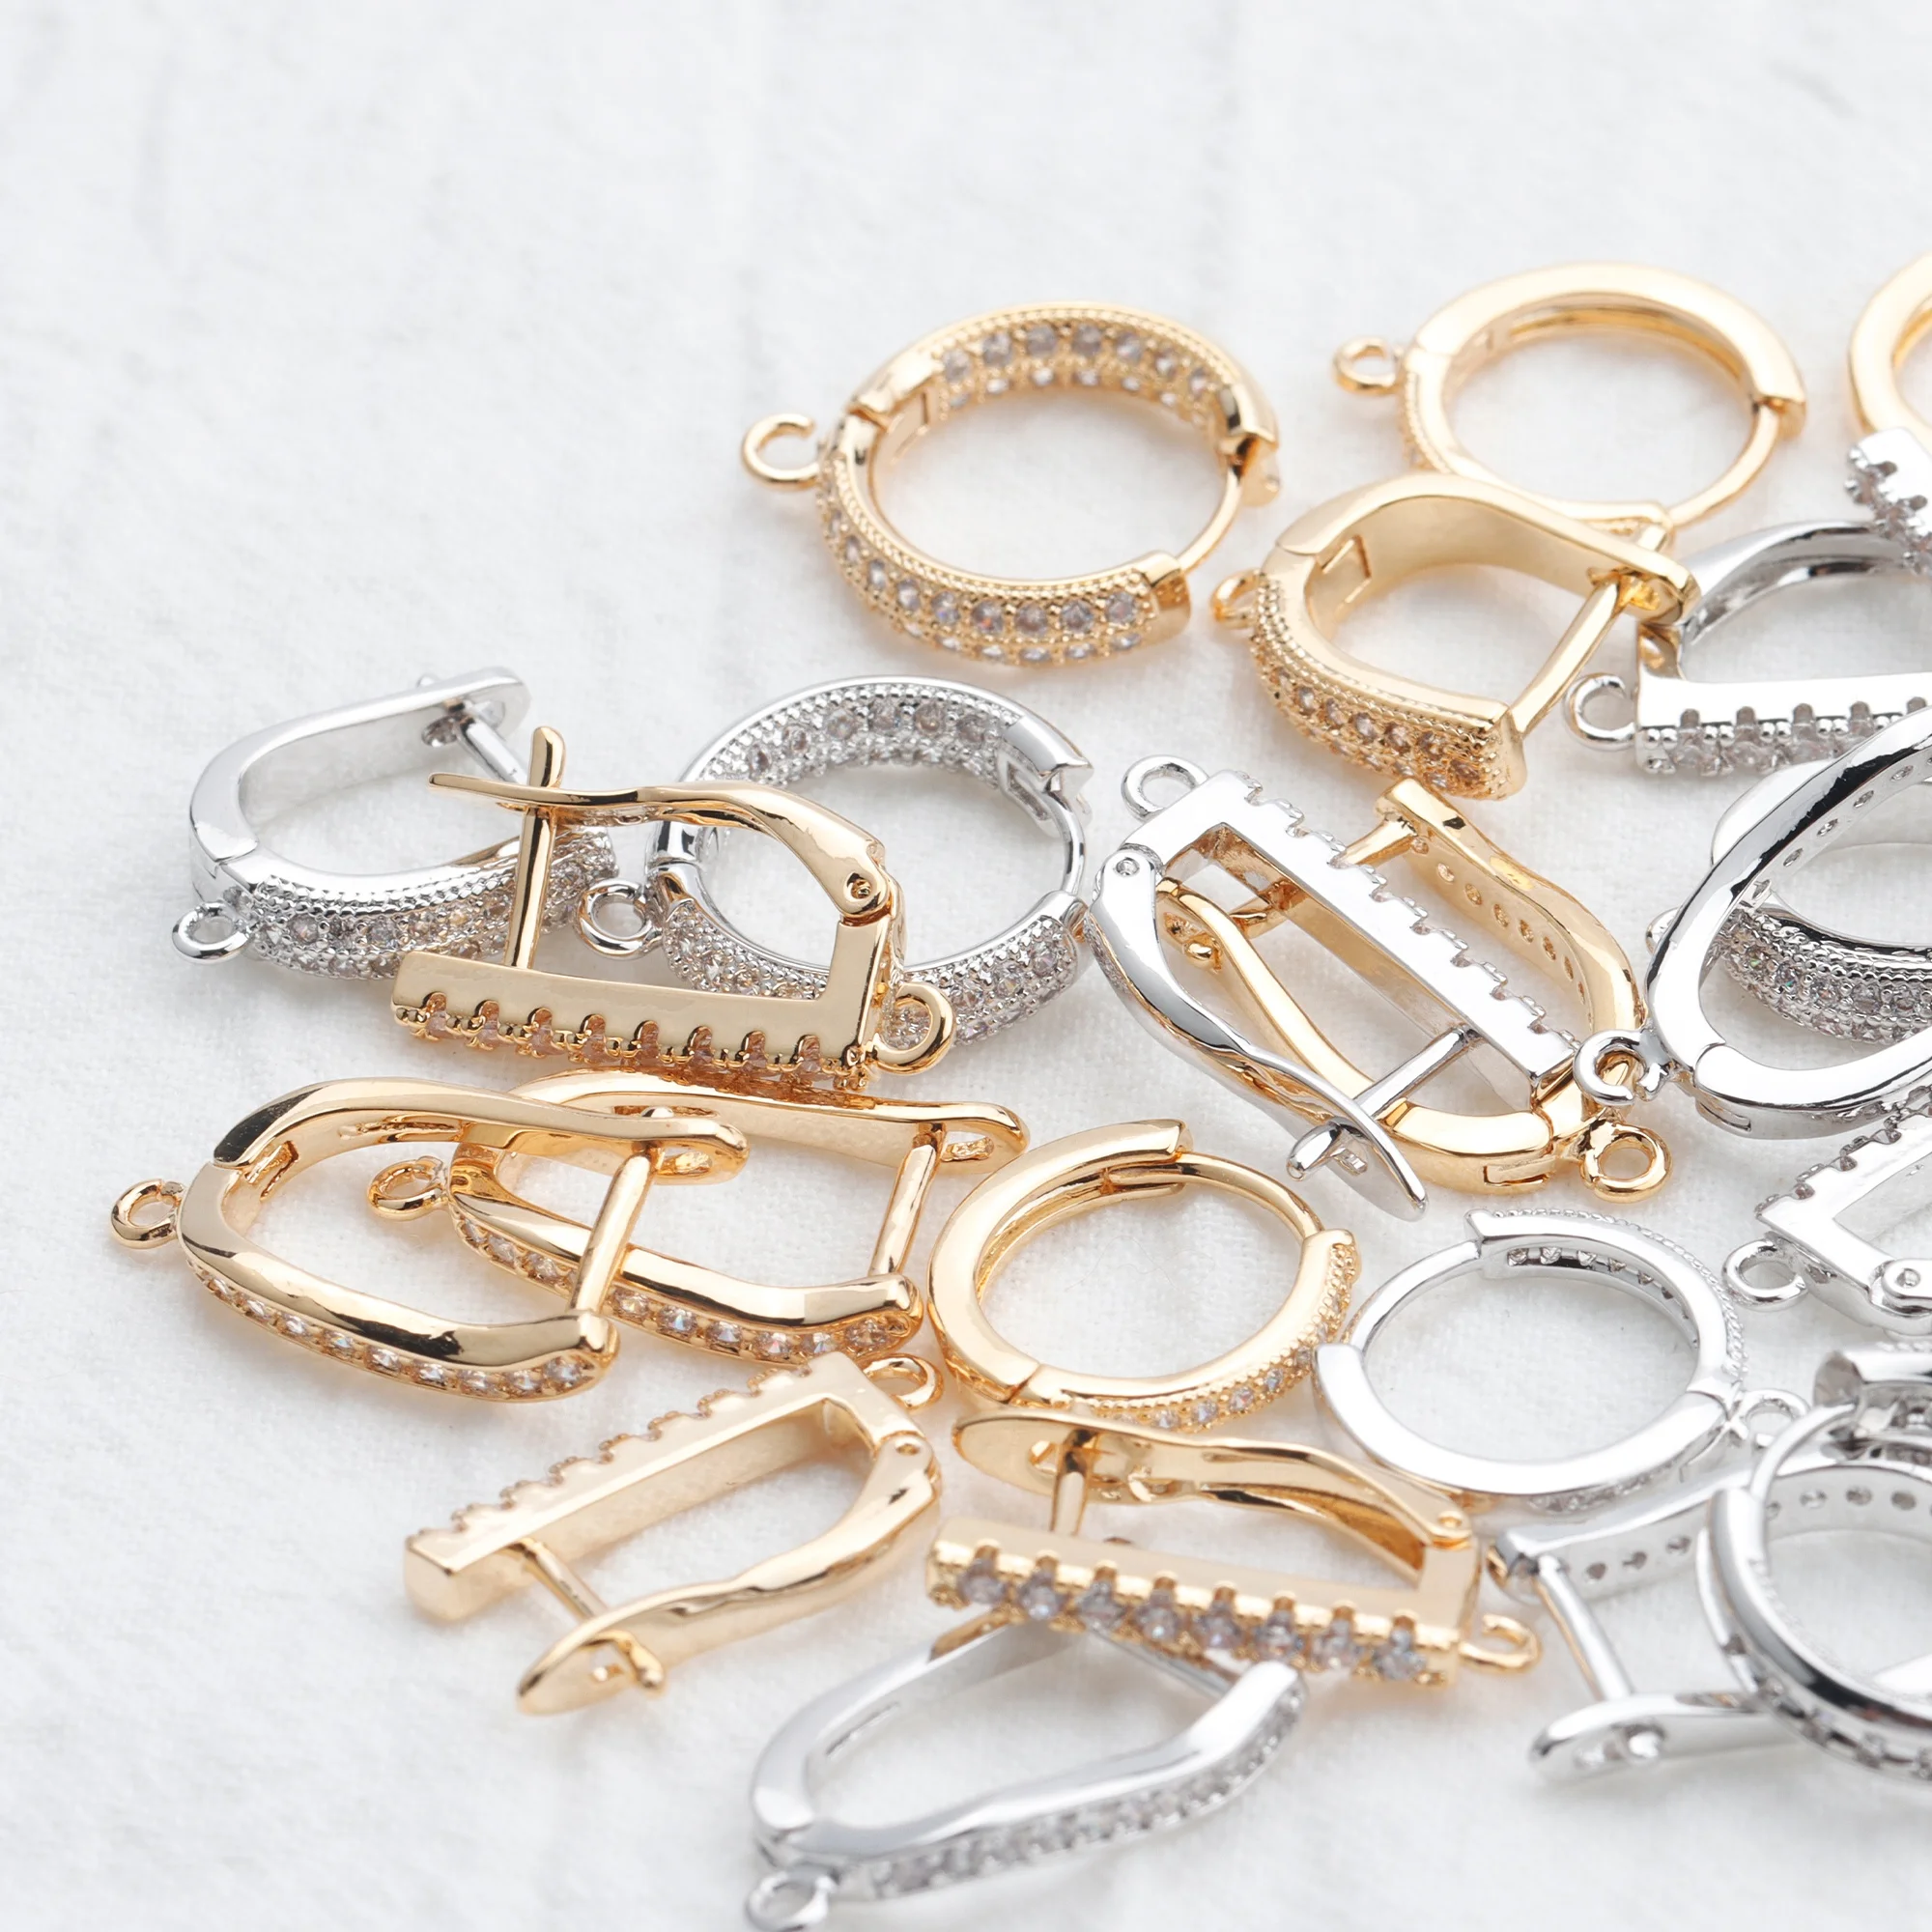 

Wholesale Metal Zircon Diy Earrings Clasp Hooks For Women Jewelry Making Accessories M806 10pcs/lot, Gold,silver